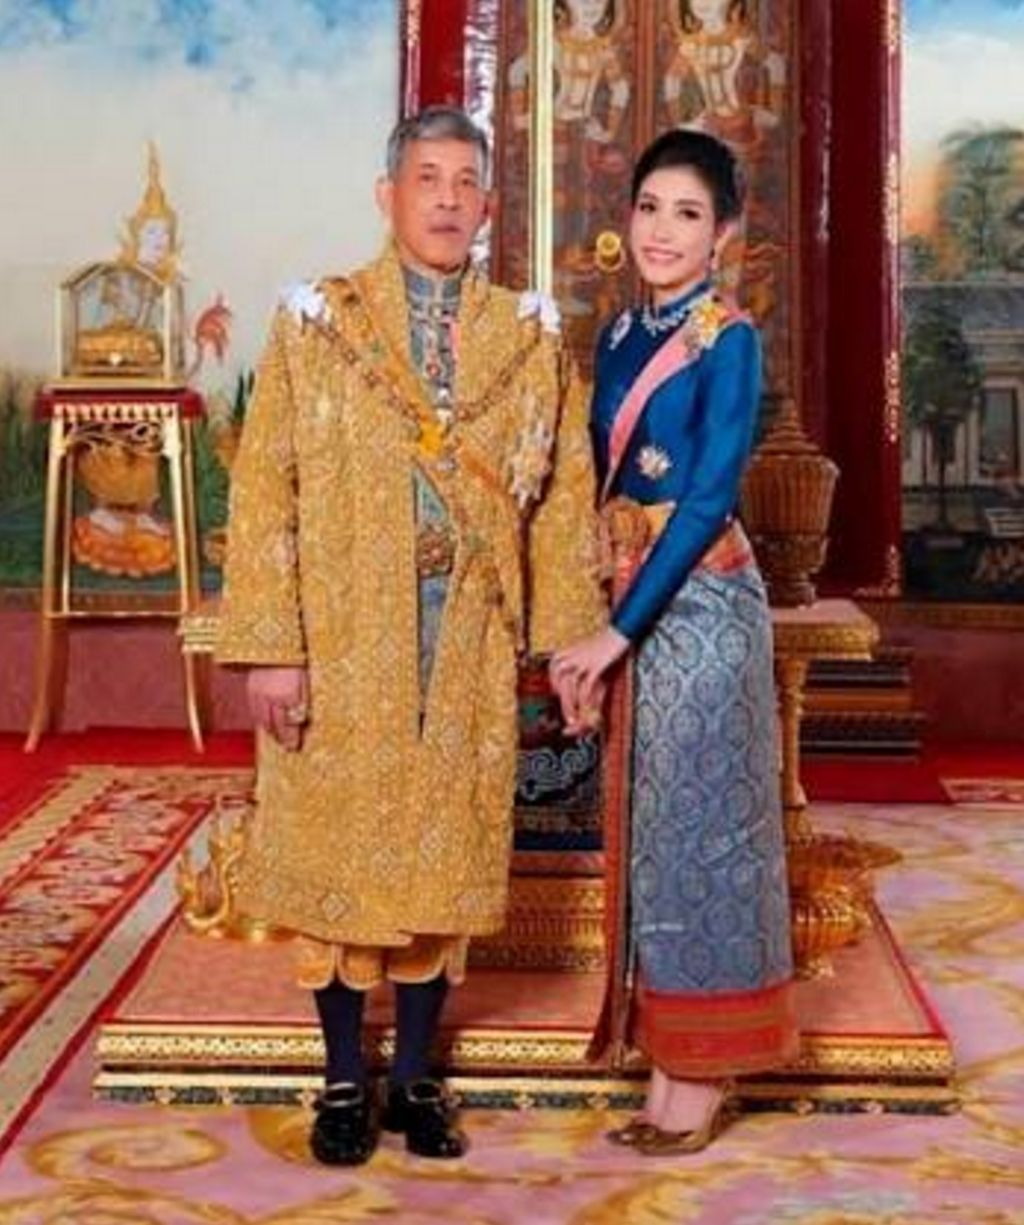 Thailands König Maha Vajiralongkorn begnadigt seine Geliebte